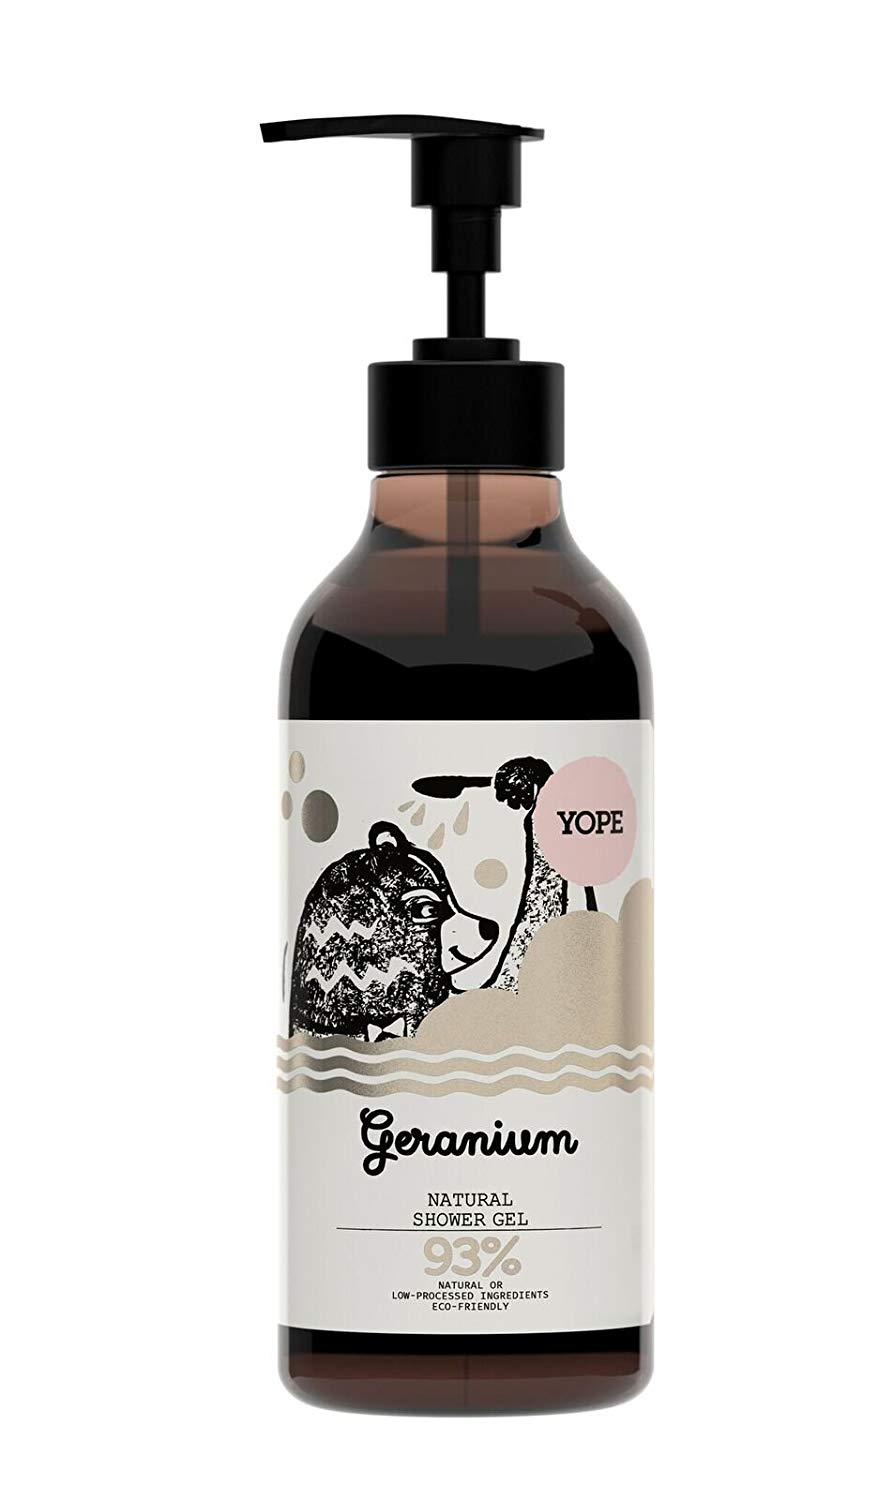 Natural Skincare Products: Yope Geranium Shower Gel